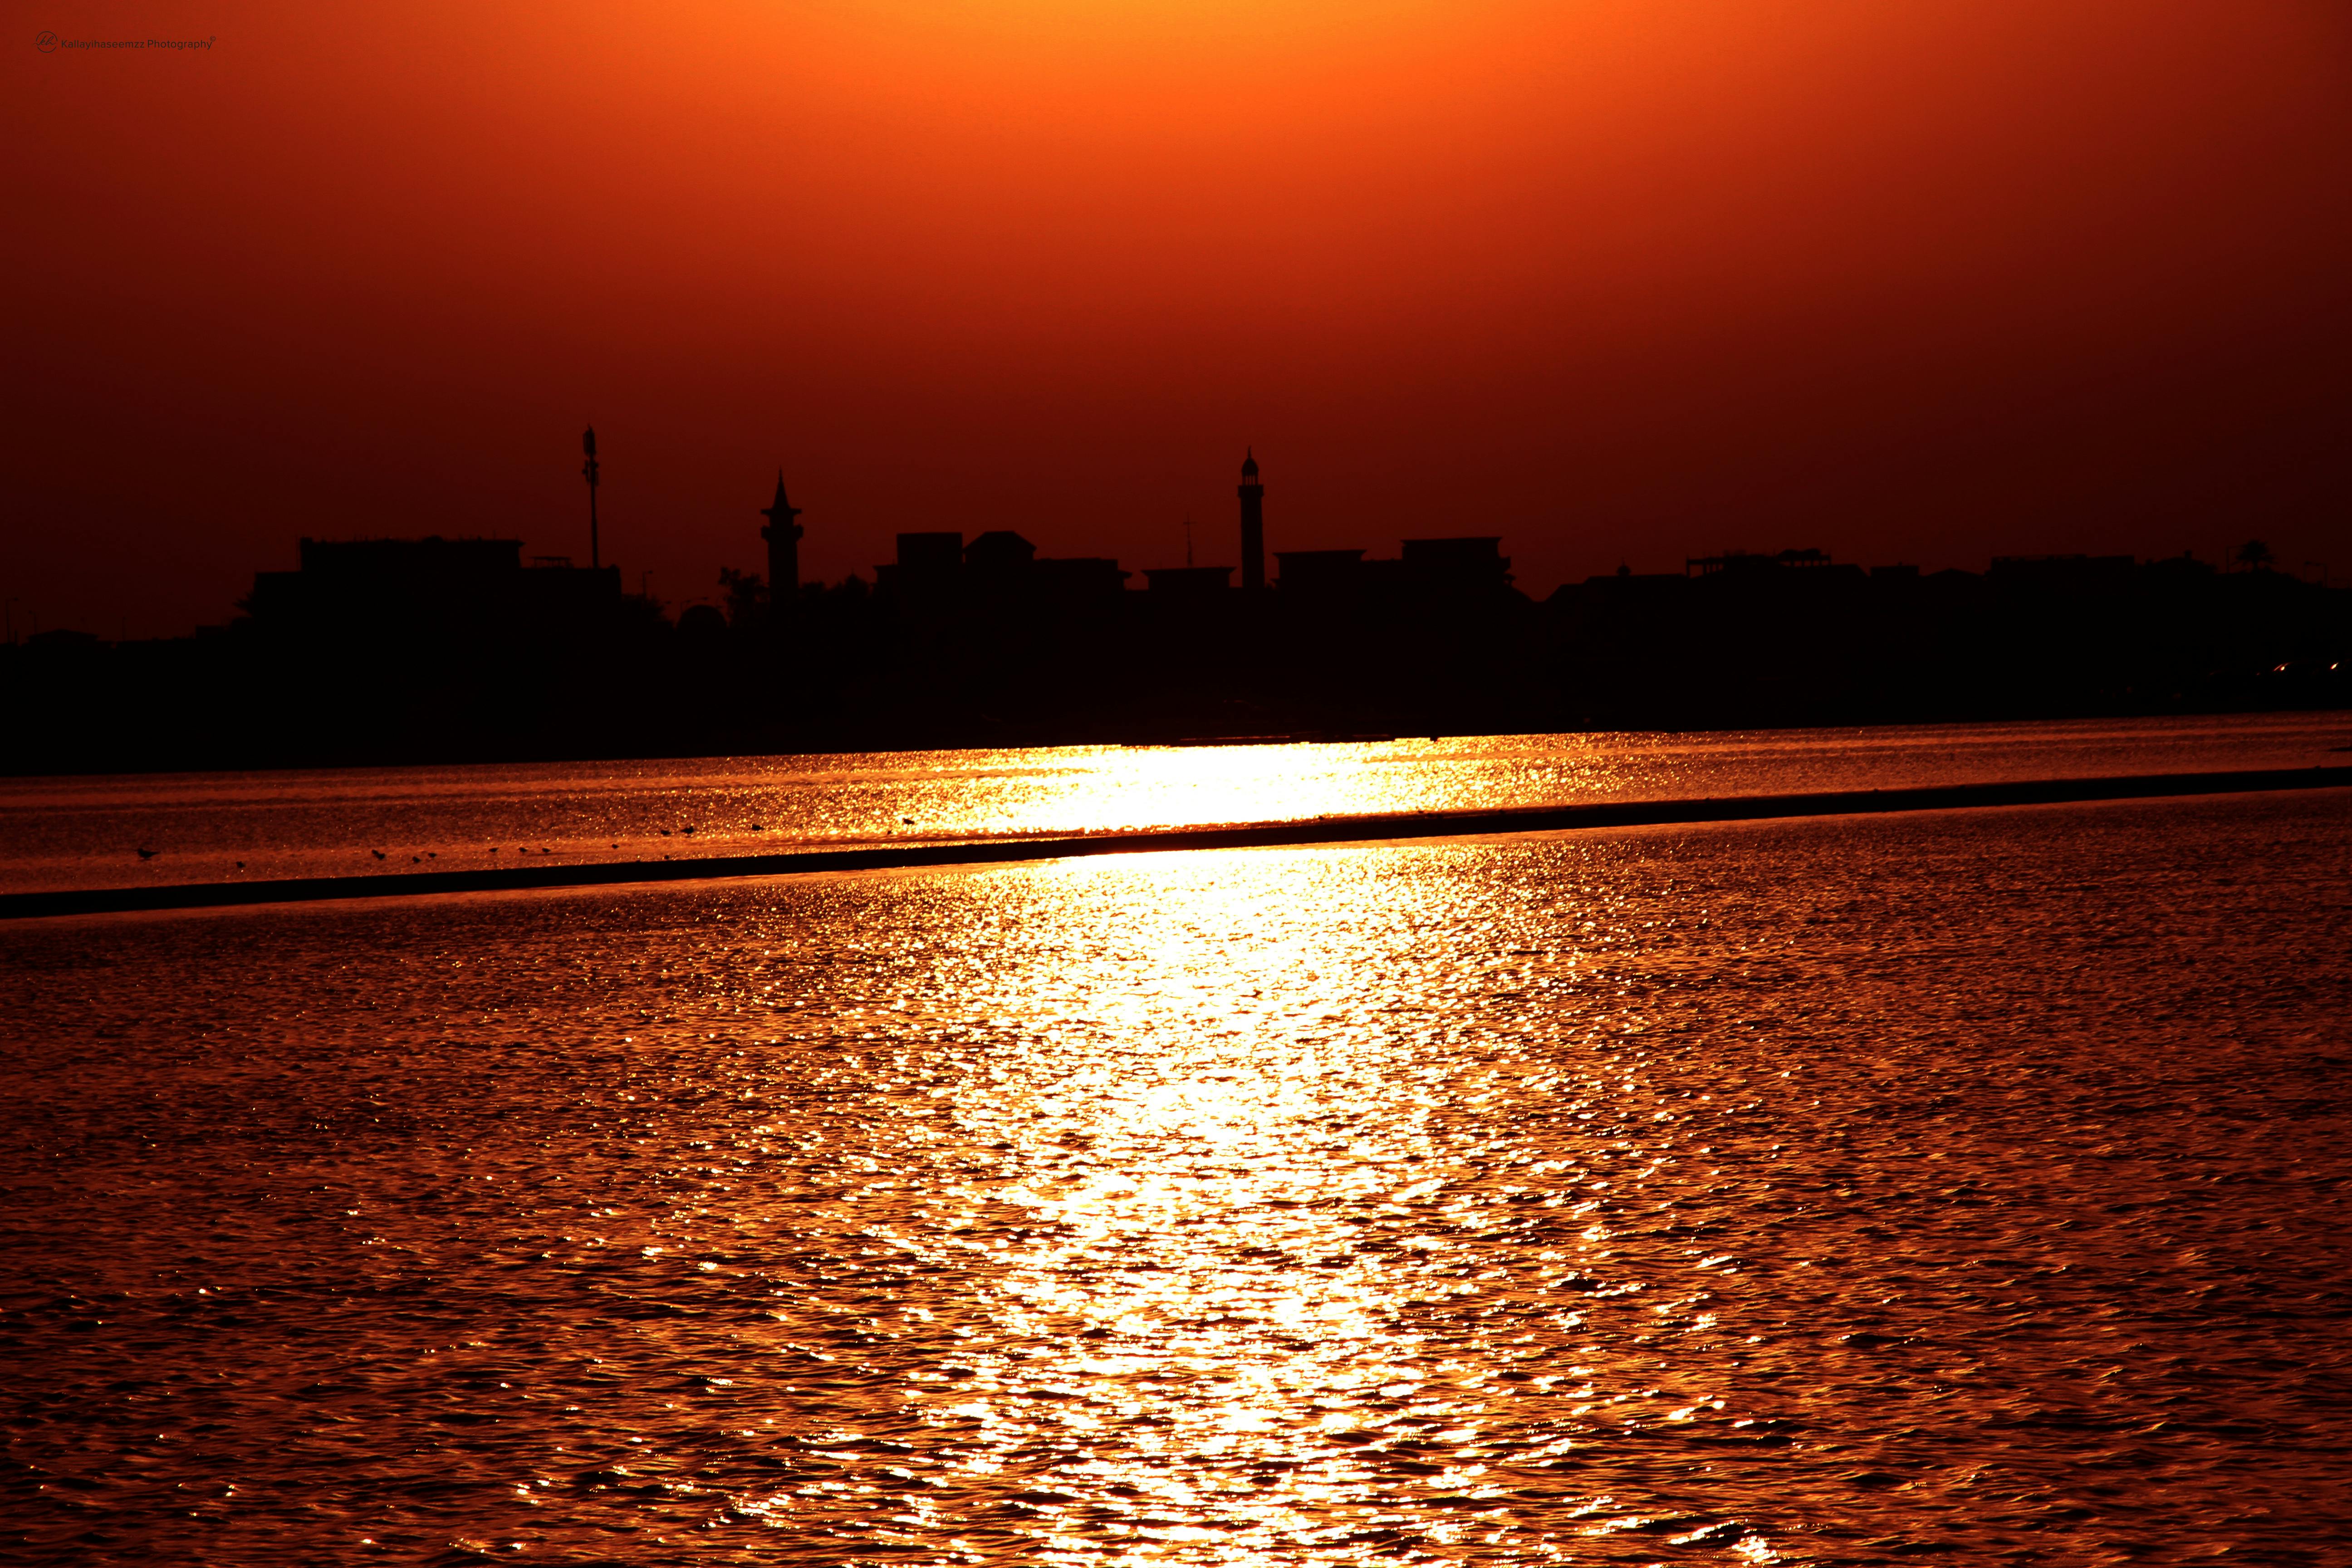 Free stock photo of sunset sunset sunrise photography #pexels desert #desert #sand #dunes good evening #good evening